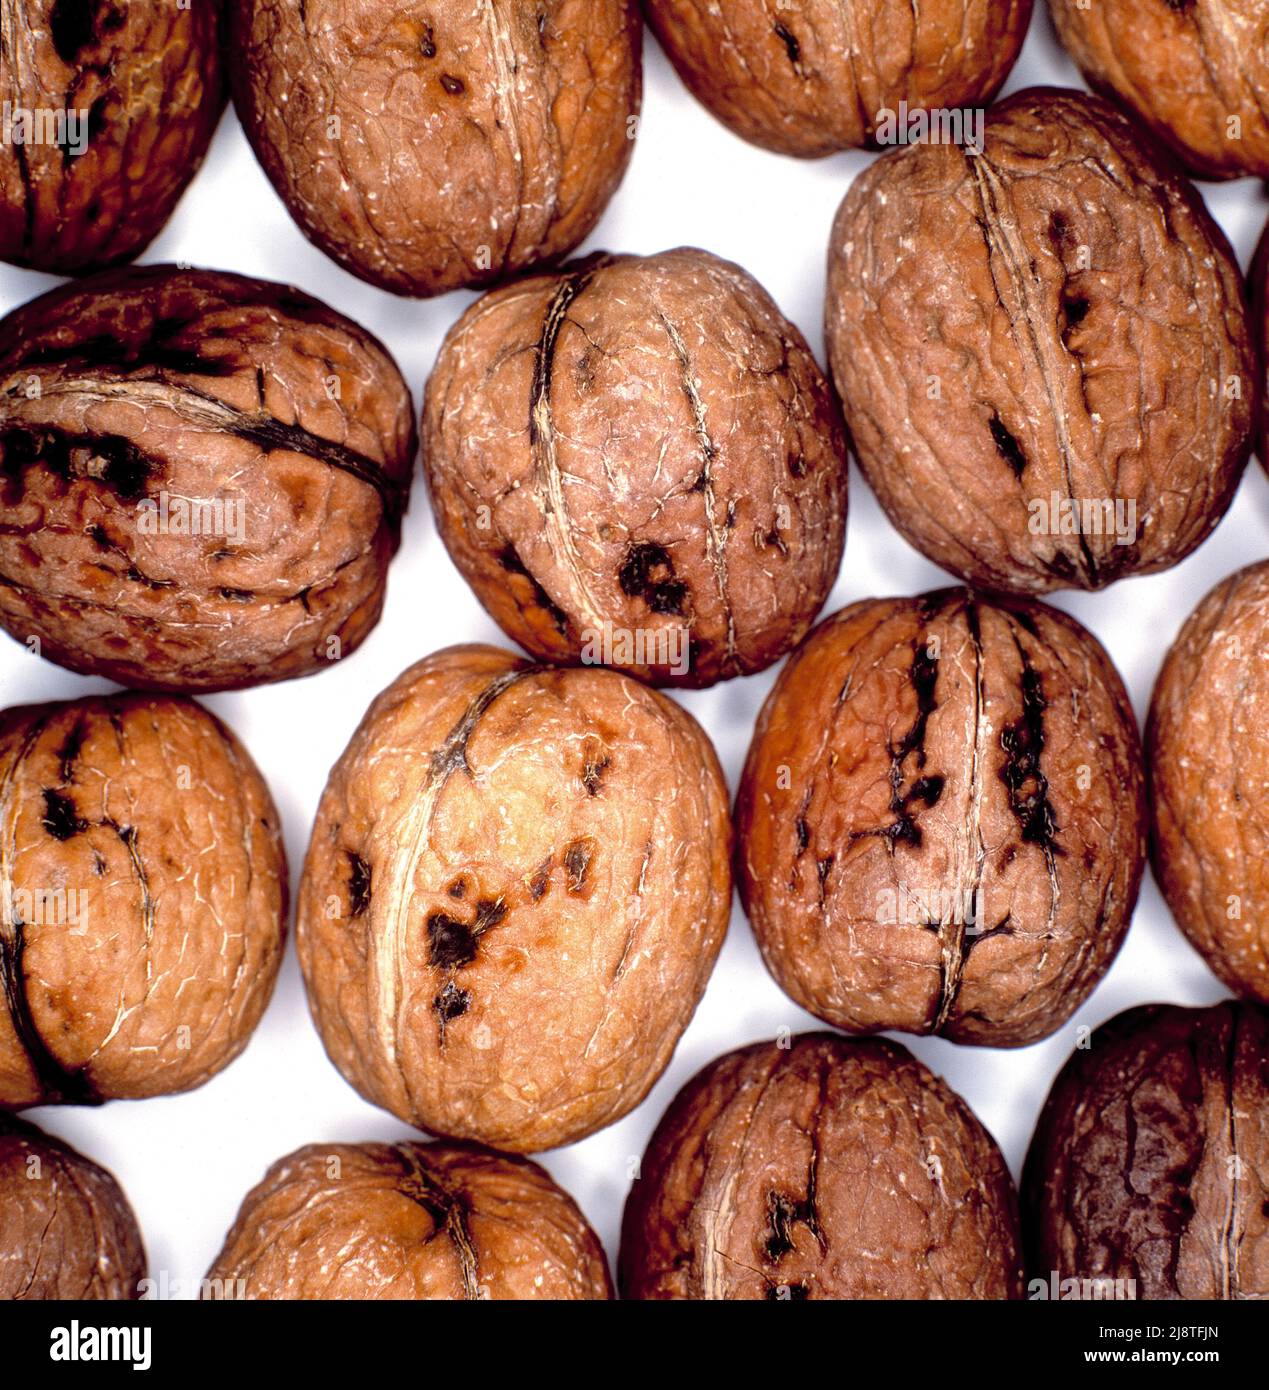 Fresh walnuts. Stock Photo